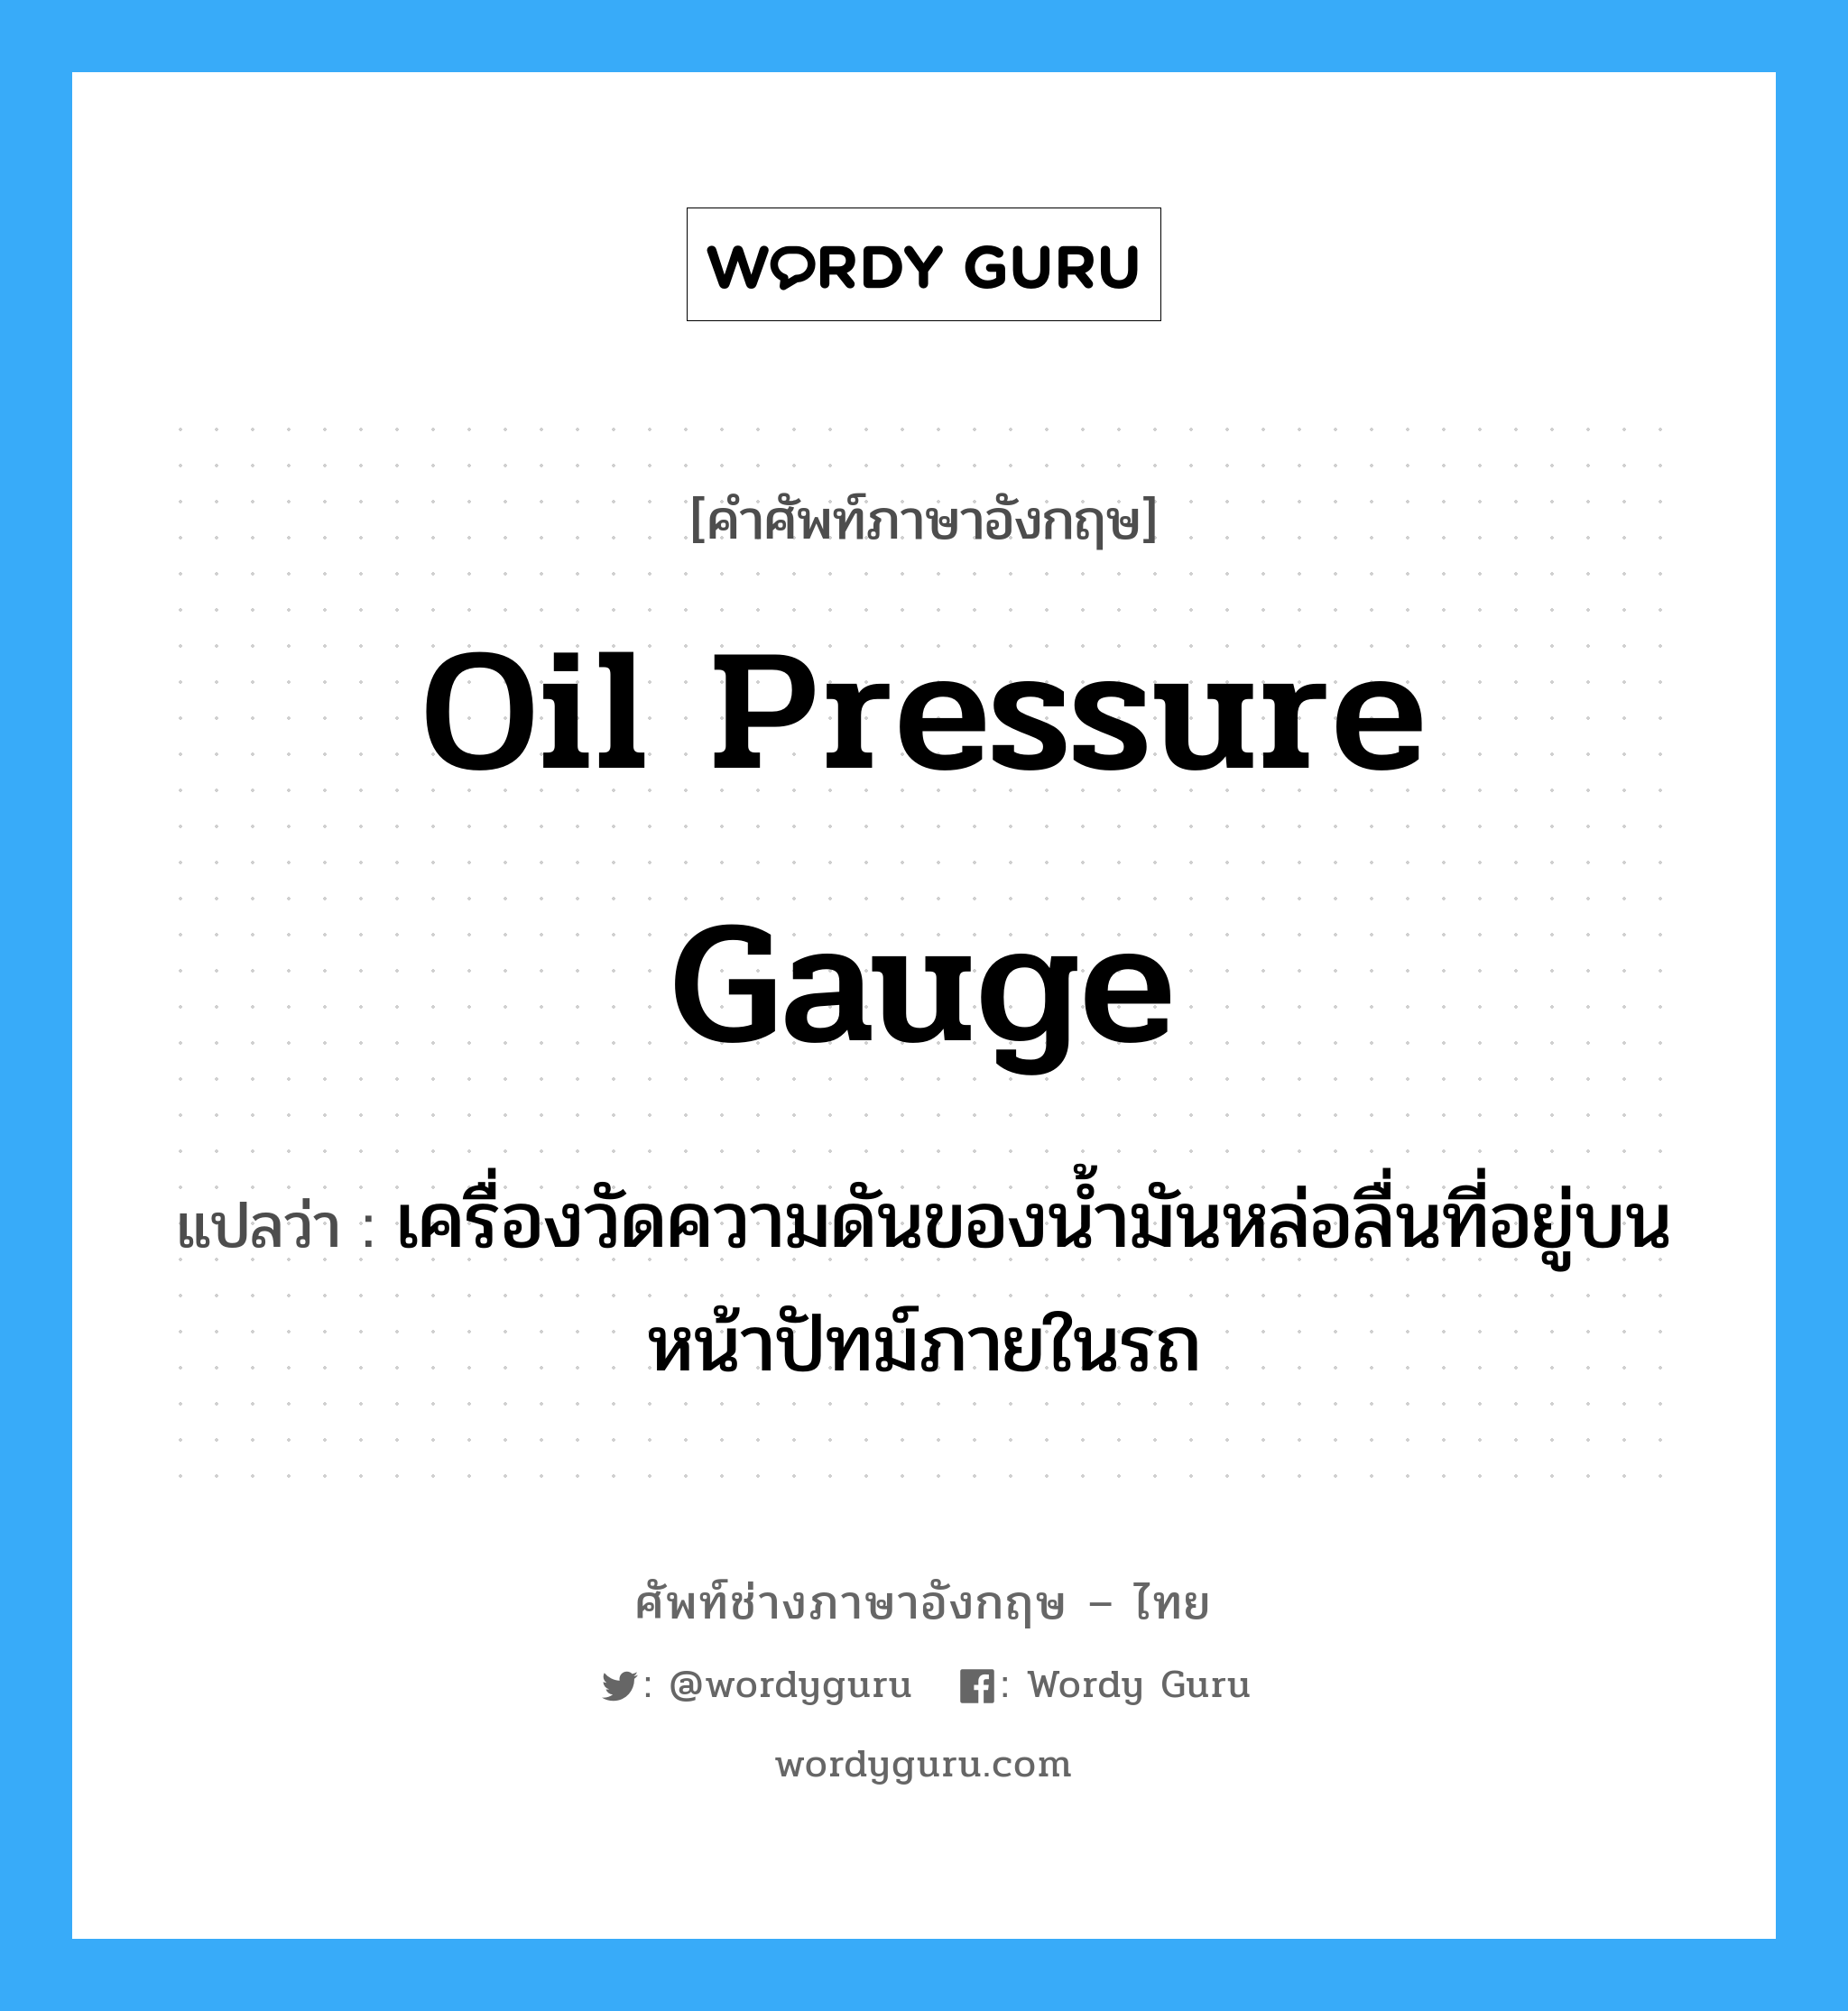 oil pressure gauge แปลว่า?, คำศัพท์ช่างภาษาอังกฤษ - ไทย oil pressure gauge คำศัพท์ภาษาอังกฤษ oil pressure gauge แปลว่า เครื่องวัดความดันของน้ำมันหล่อลื่นที่อยู่บนหน้าปัทม์ภายในรถ